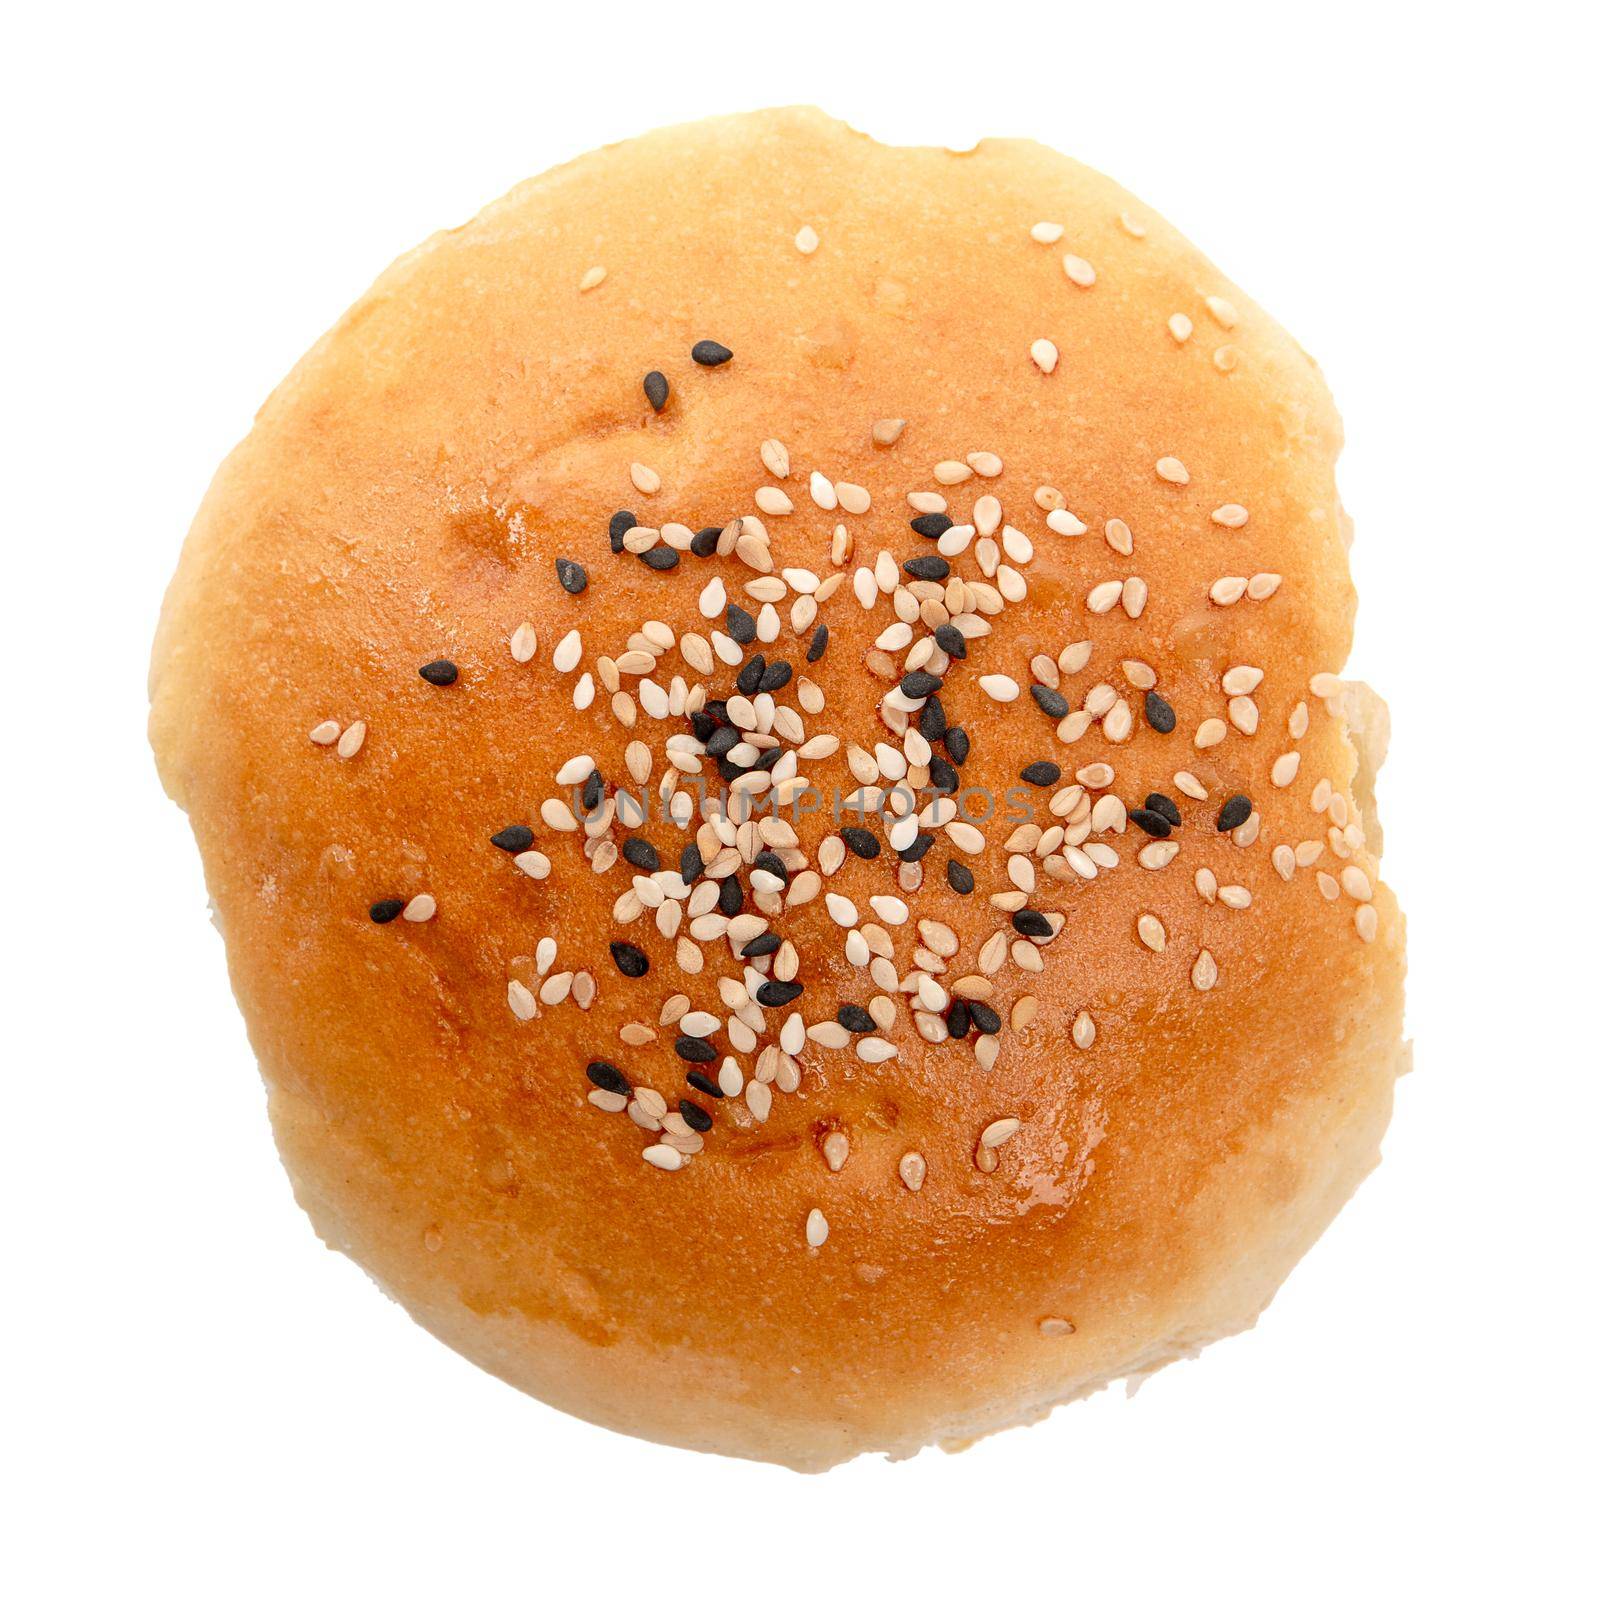 Hamburger bun by homydesign